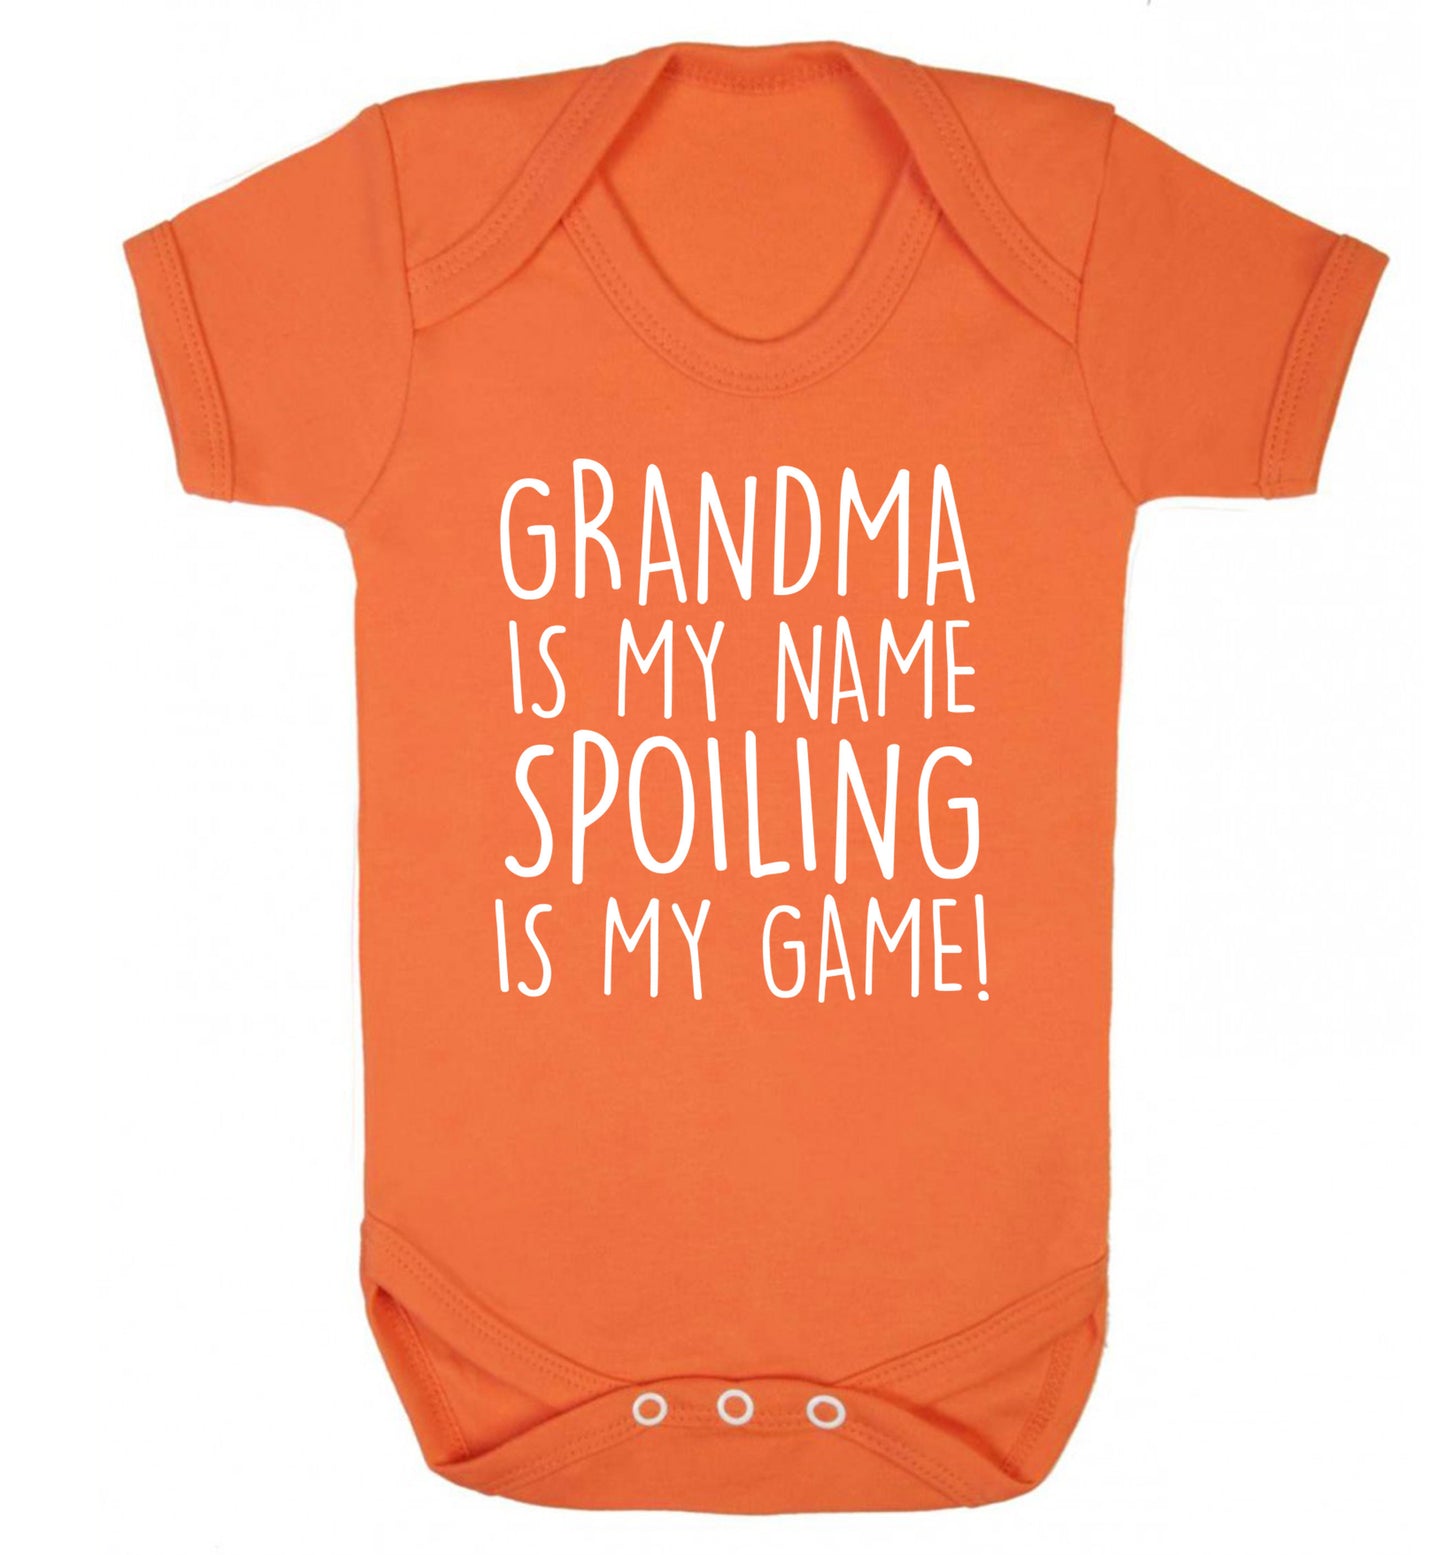 Grandma is my name, spoiling is my game Baby Vest orange 18-24 months